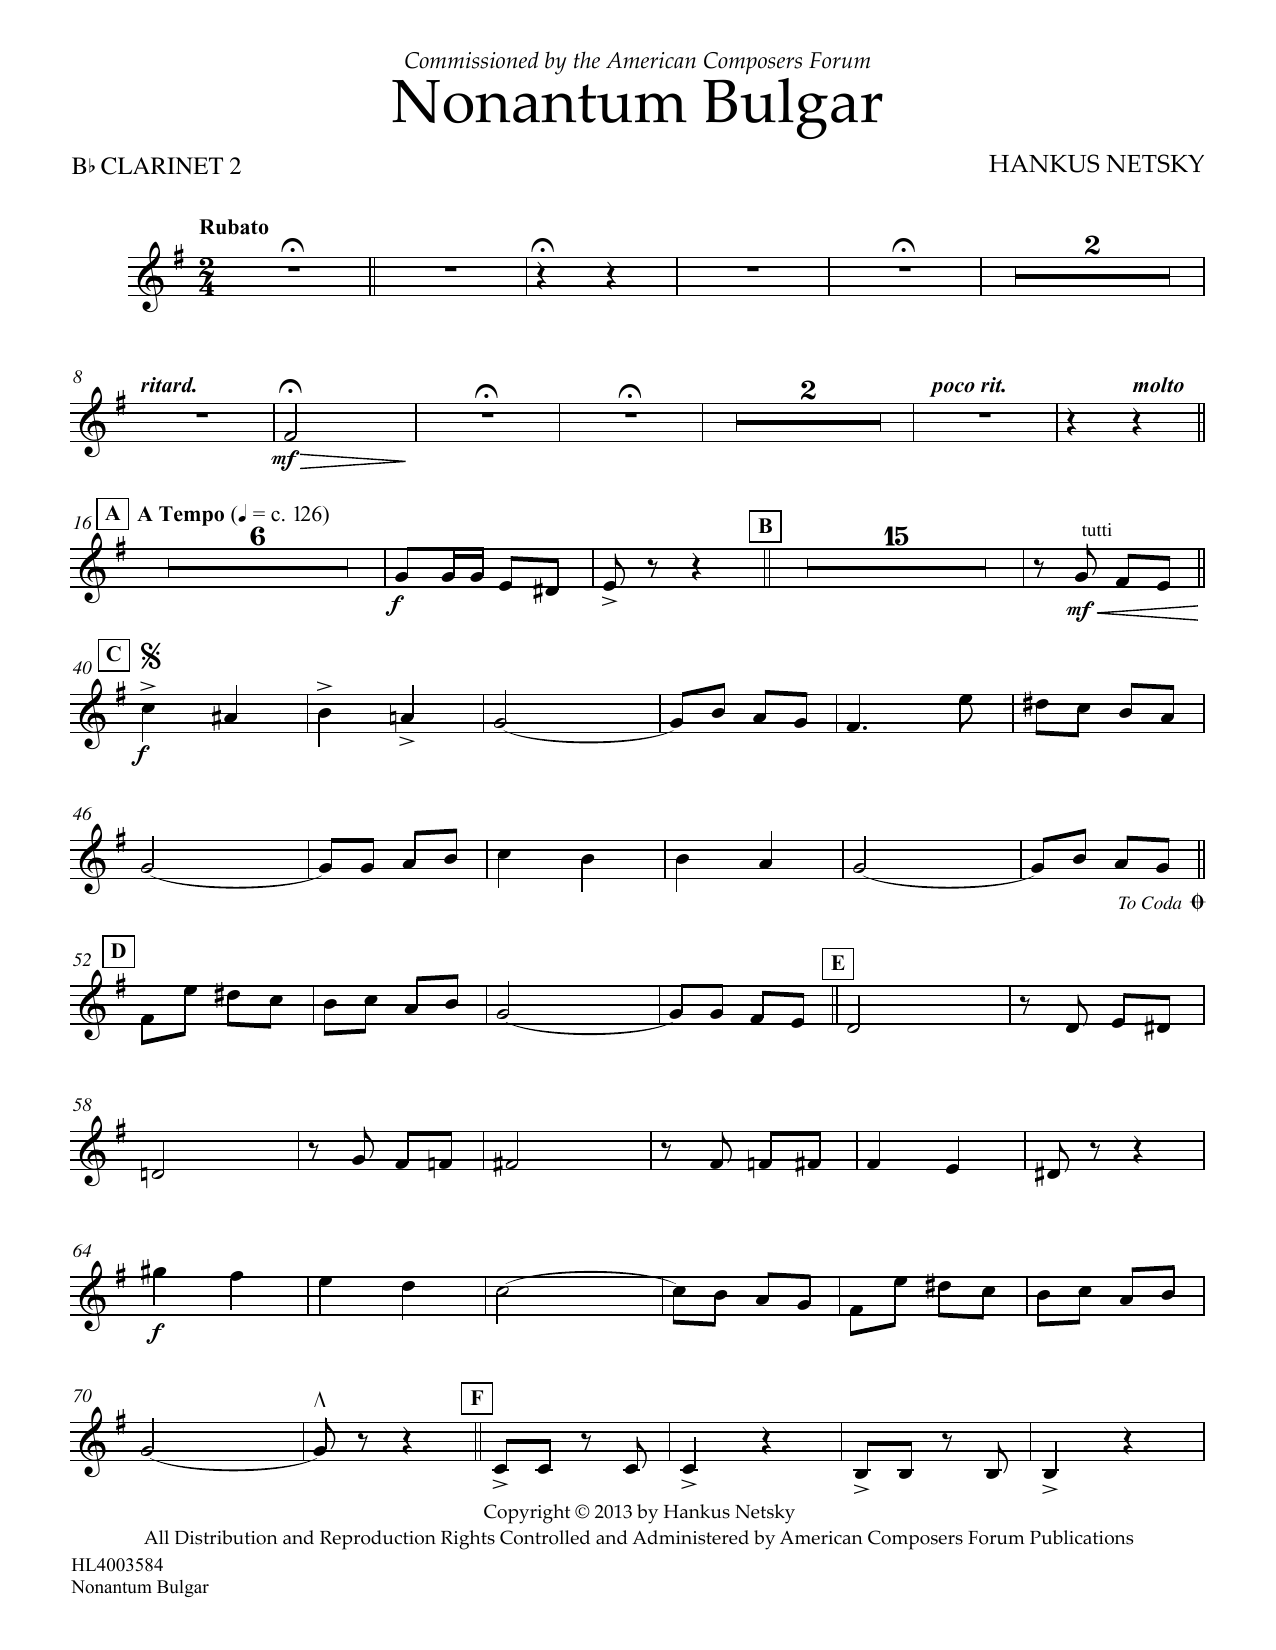 Hankus Netsky Nonantum Bulgar - Clarinet 2 Sheet Music Notes & Chords for Concert Band - Download or Print PDF